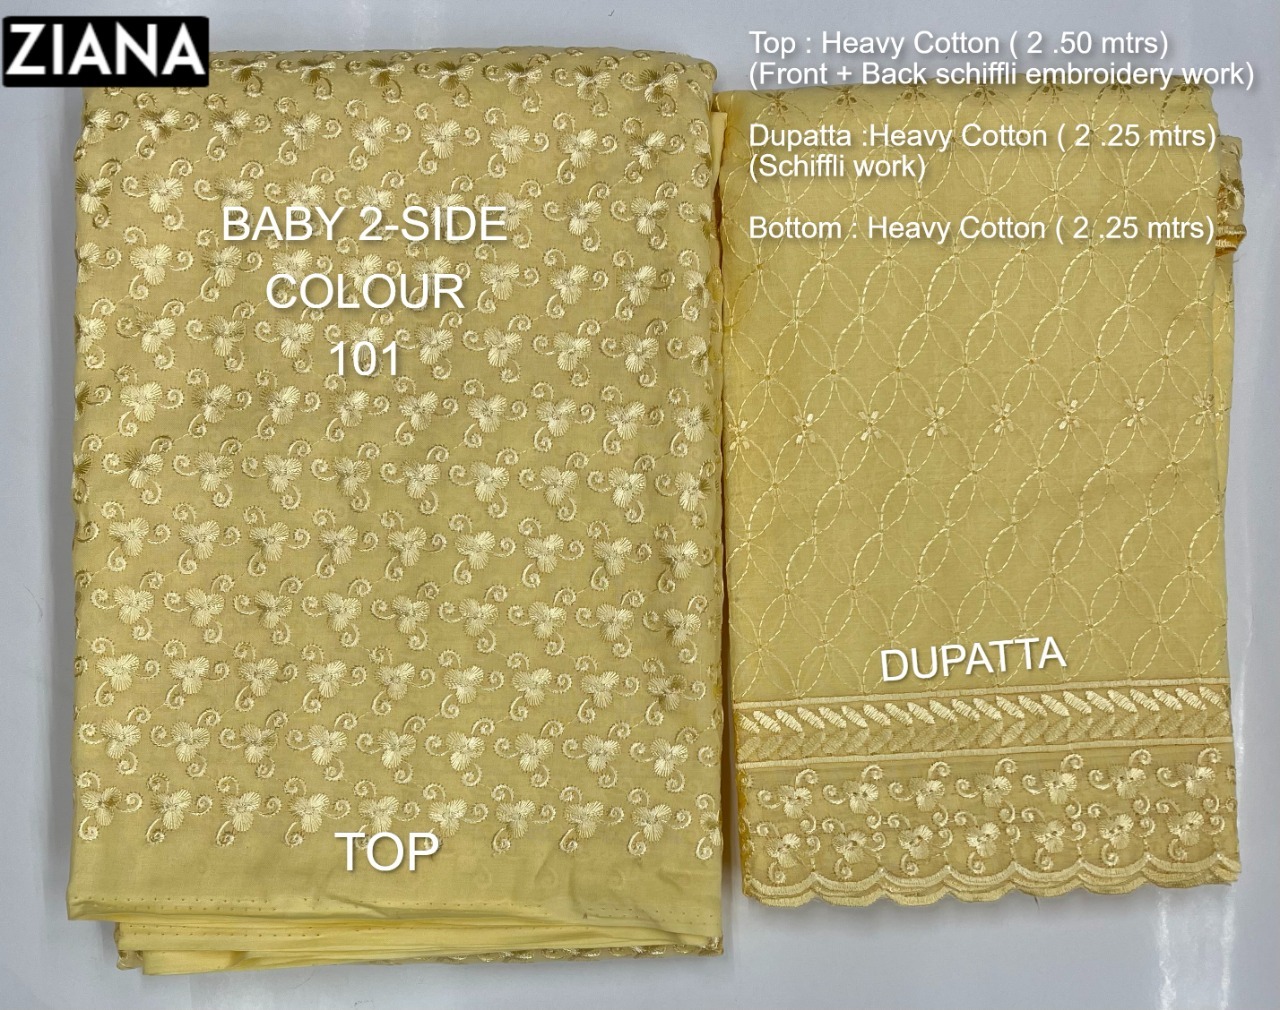 ziana baby 2 side colour 101 heavy cotton elegant look embroidery salwar suit colour set